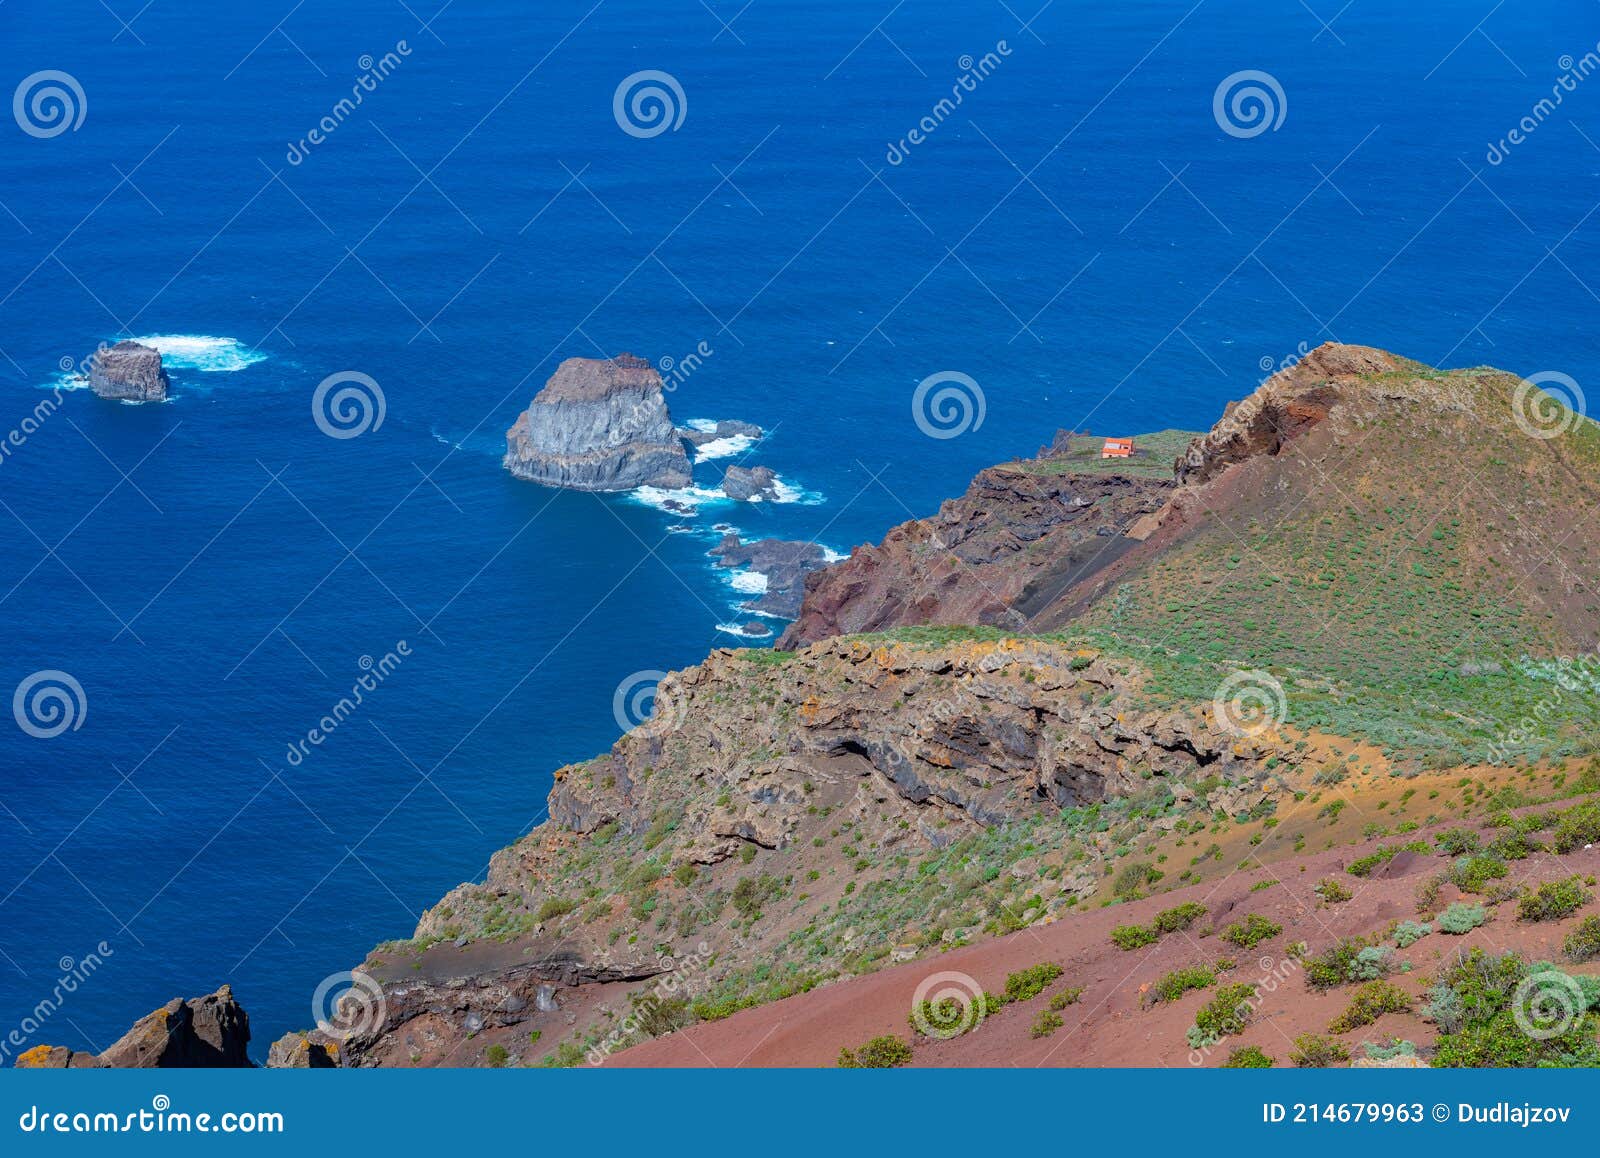 roques de salmor at el hierro, canary islands, spain